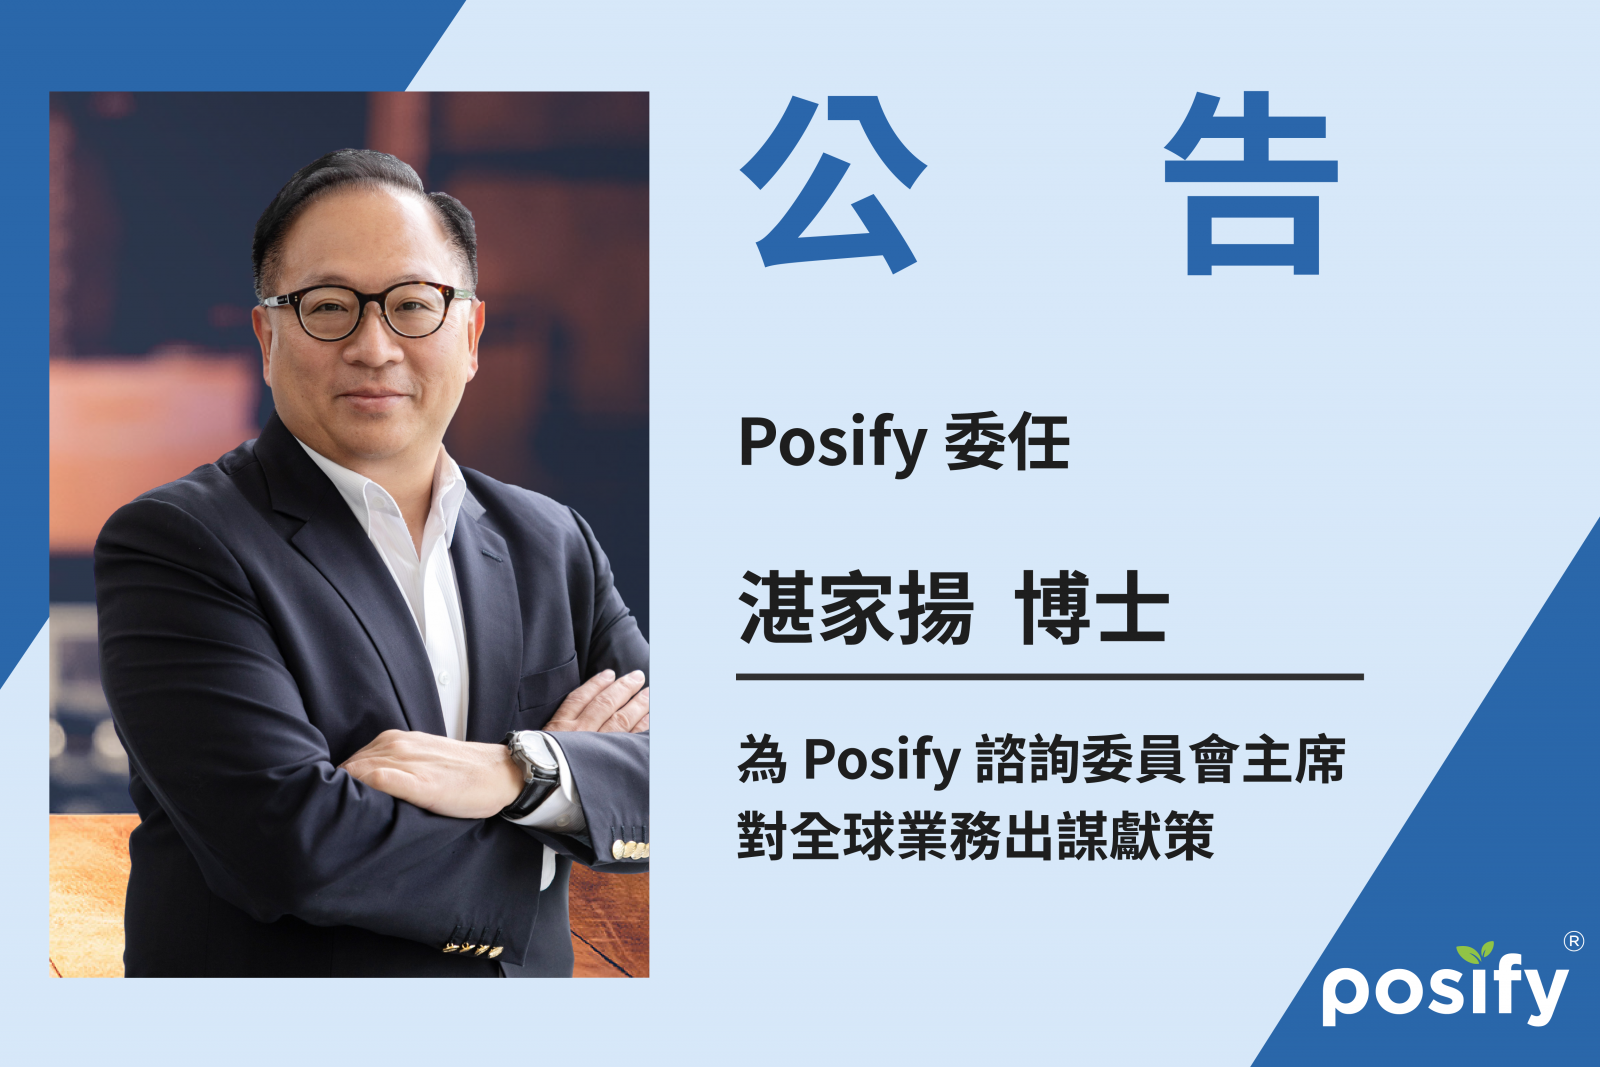 Posify委任湛家揚博士為Posify諮詢委員會主席，對Posify全球業務出謀獻策 